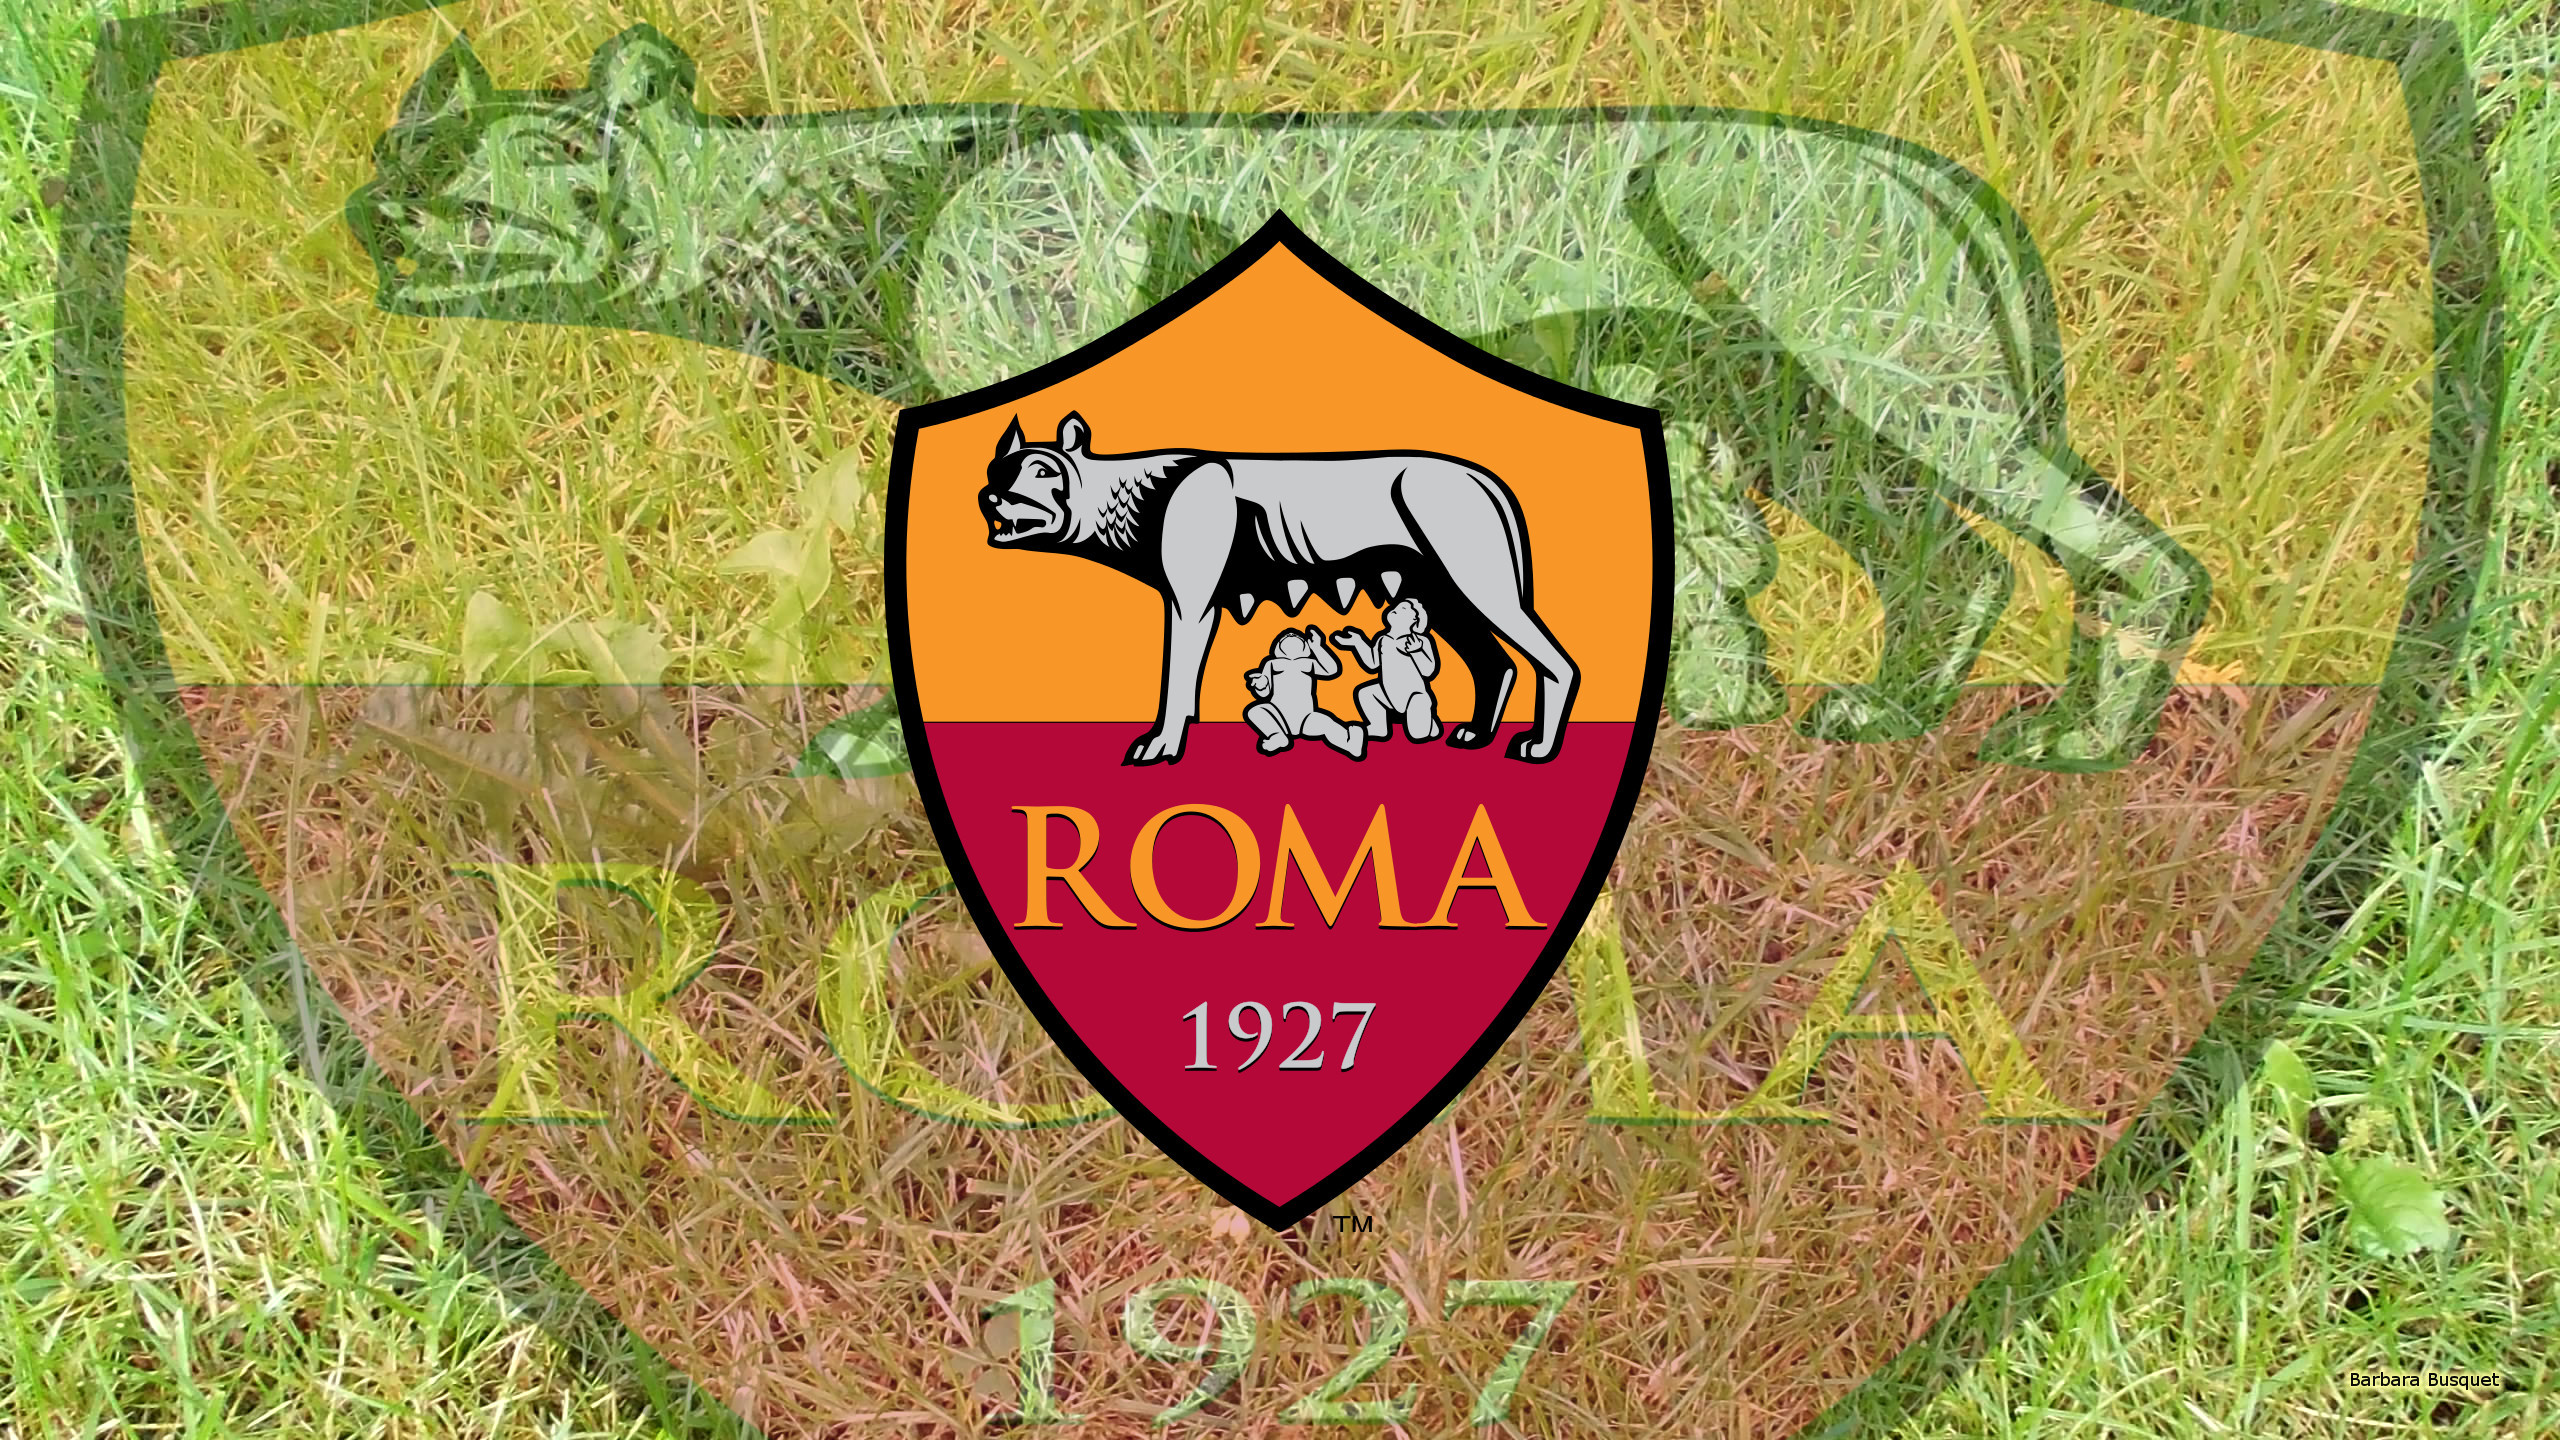 Roma Wallpaper